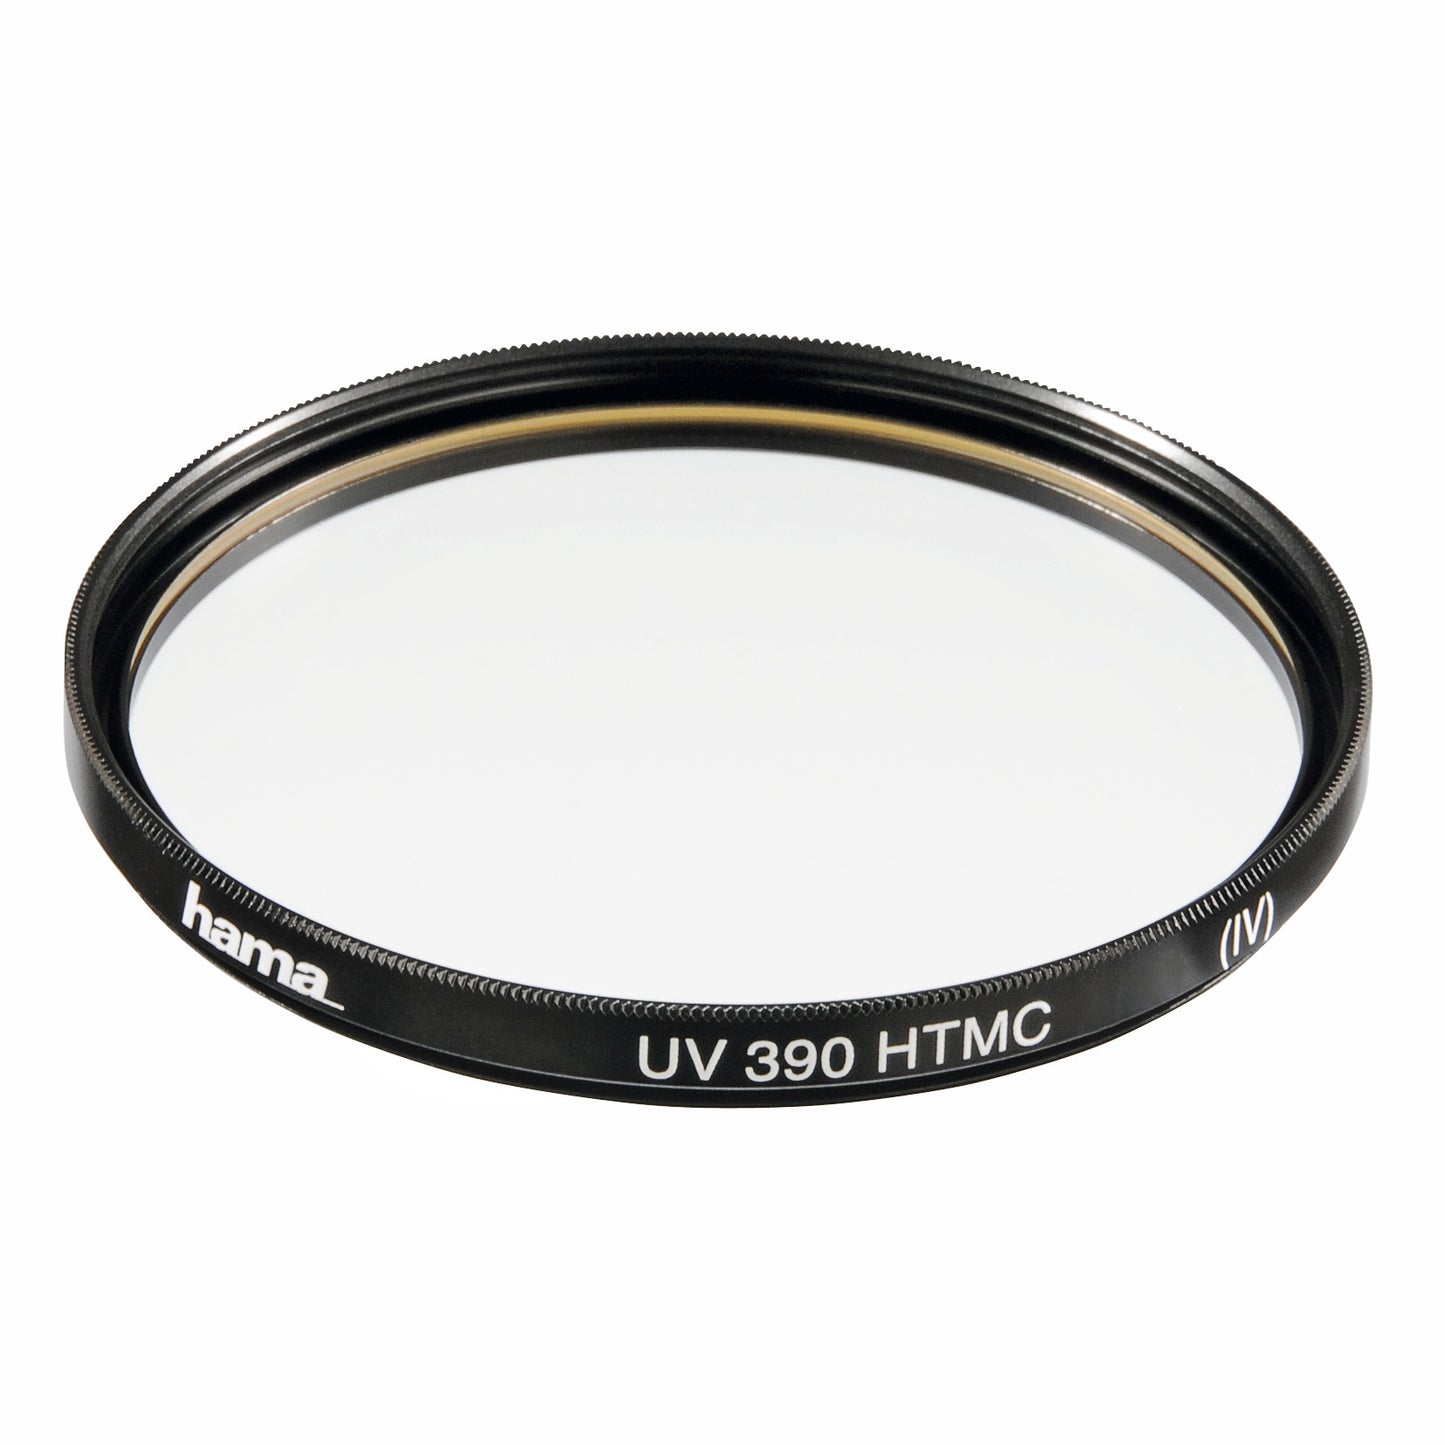 UV Filter 390, HTMC multi-coated, 77.0 mm